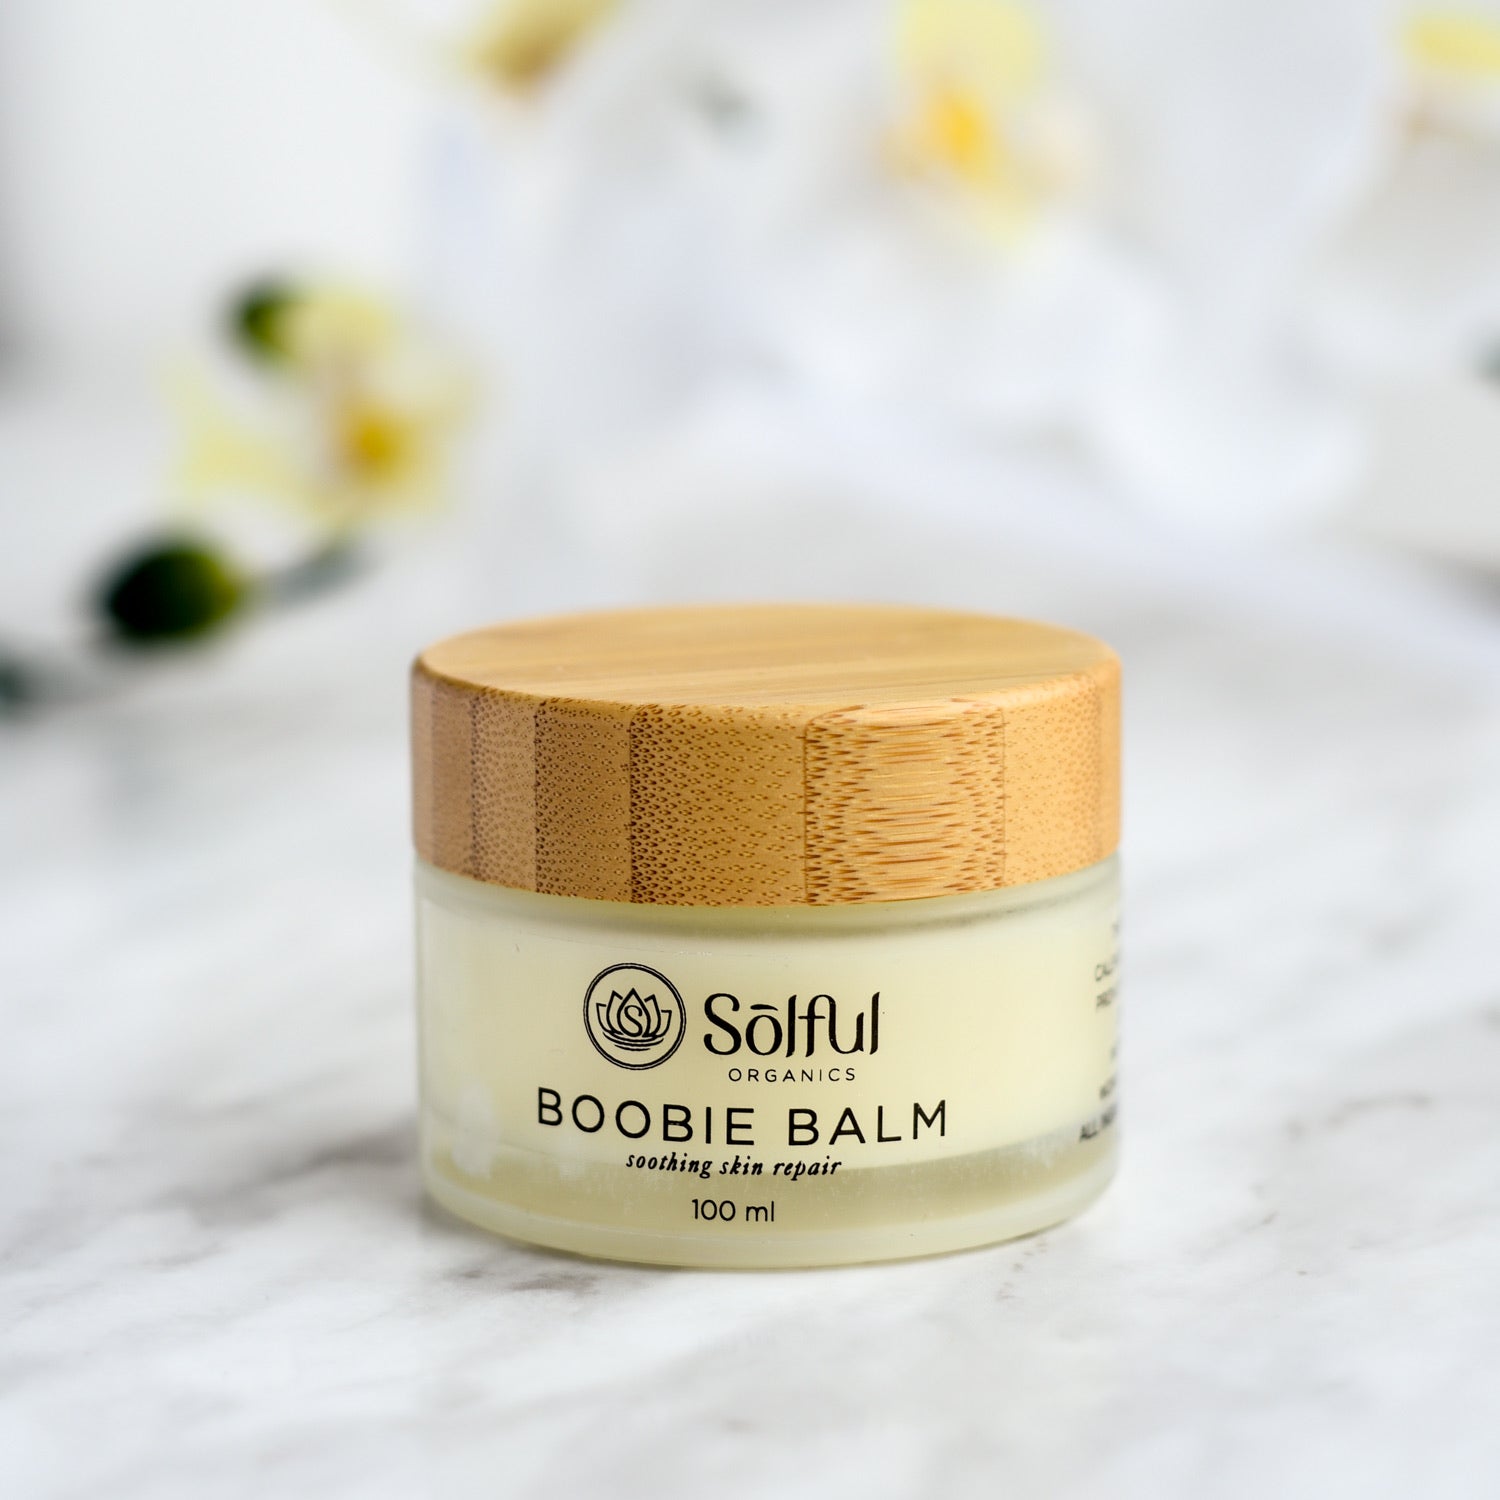 Solful Organics Boobie Balm - soothing skin repair